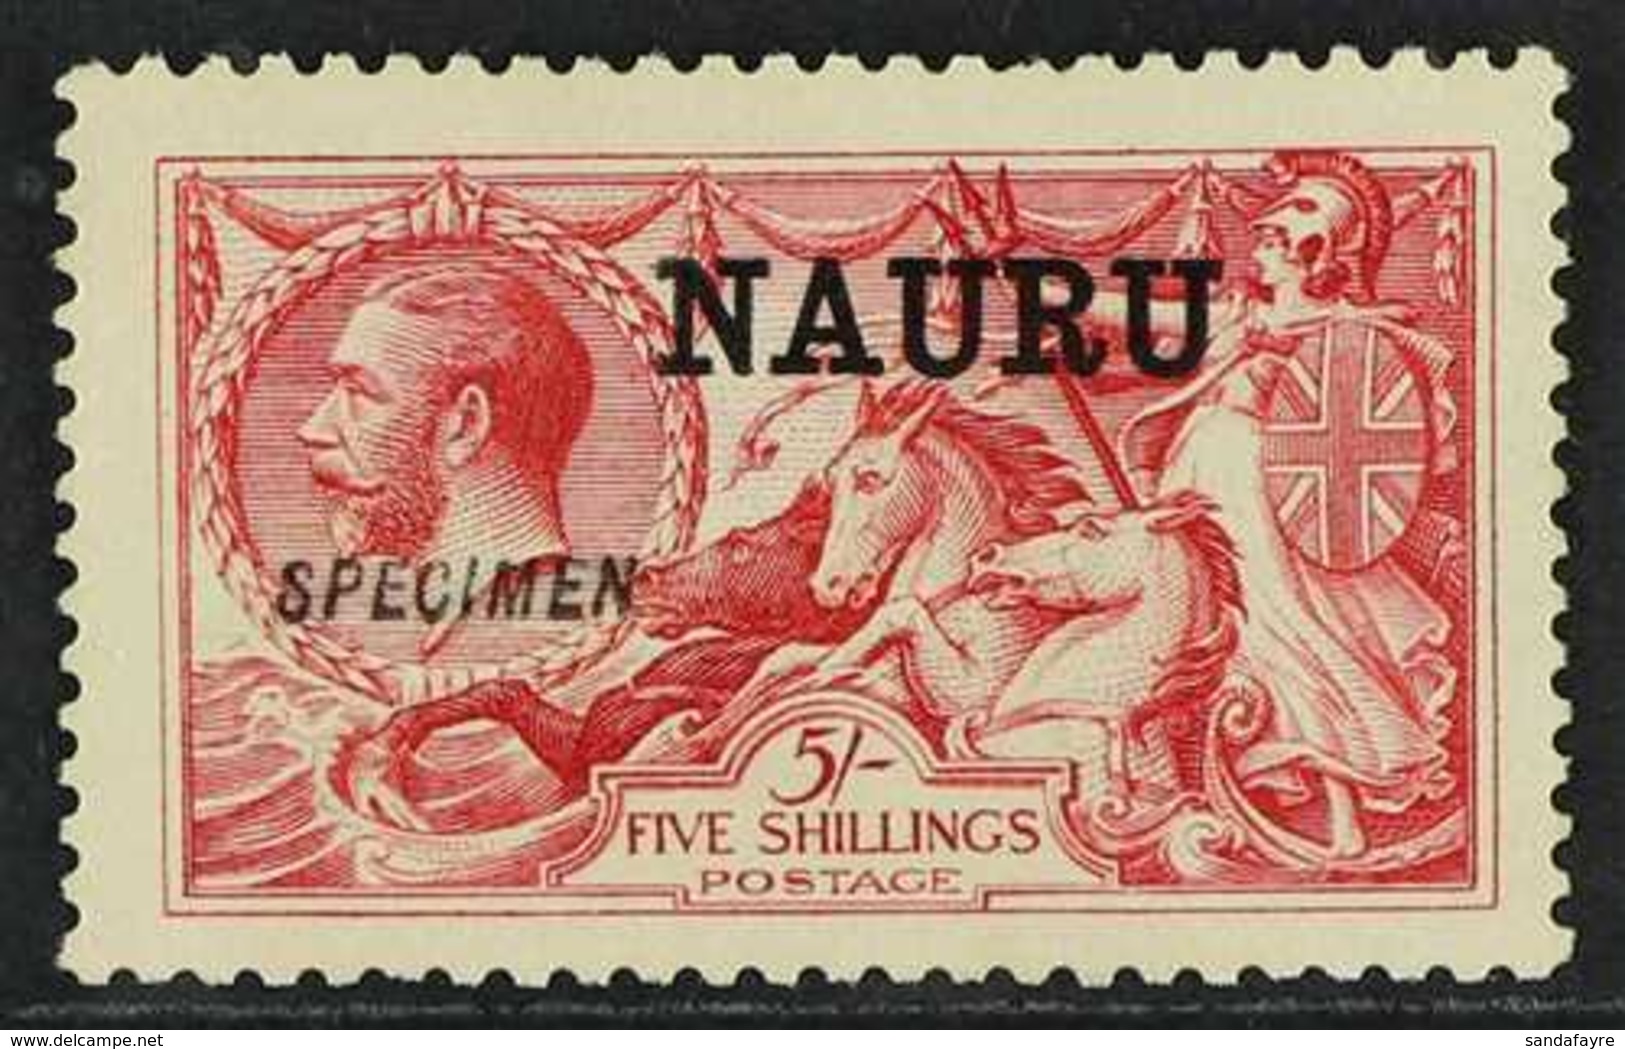 1916 - 23 5s Rose Carmine, Waterlow Seahorse, Ovptd "Specimen", SG 17s, Very Fine Mint No Gum. Ceremuga Cert. Rare Stamp - Nauru